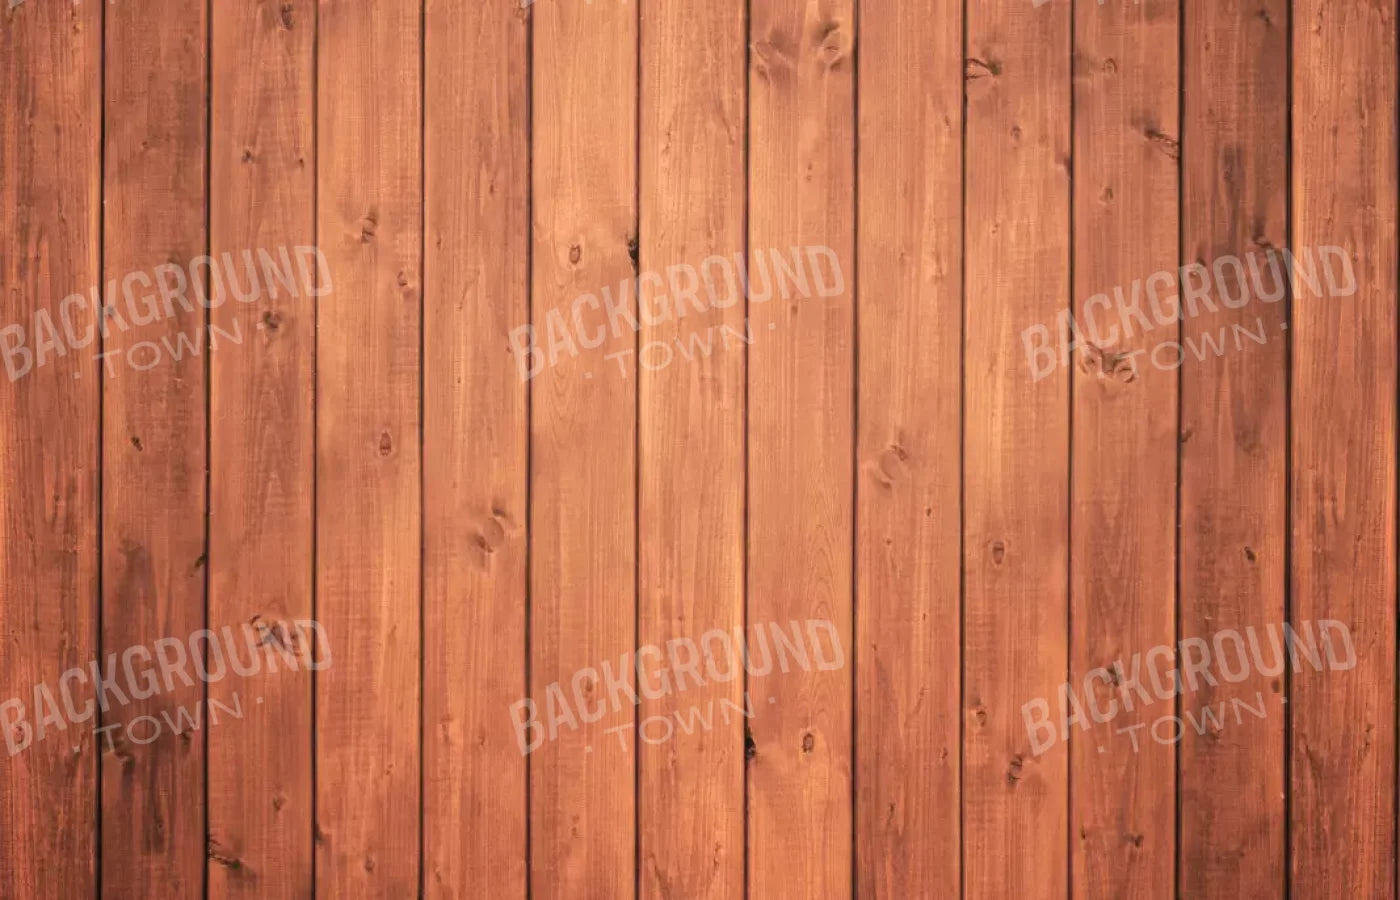 Warm Wooden Wall 12X8 Ultracloth ( 144 X 96 Inch ) Backdrop